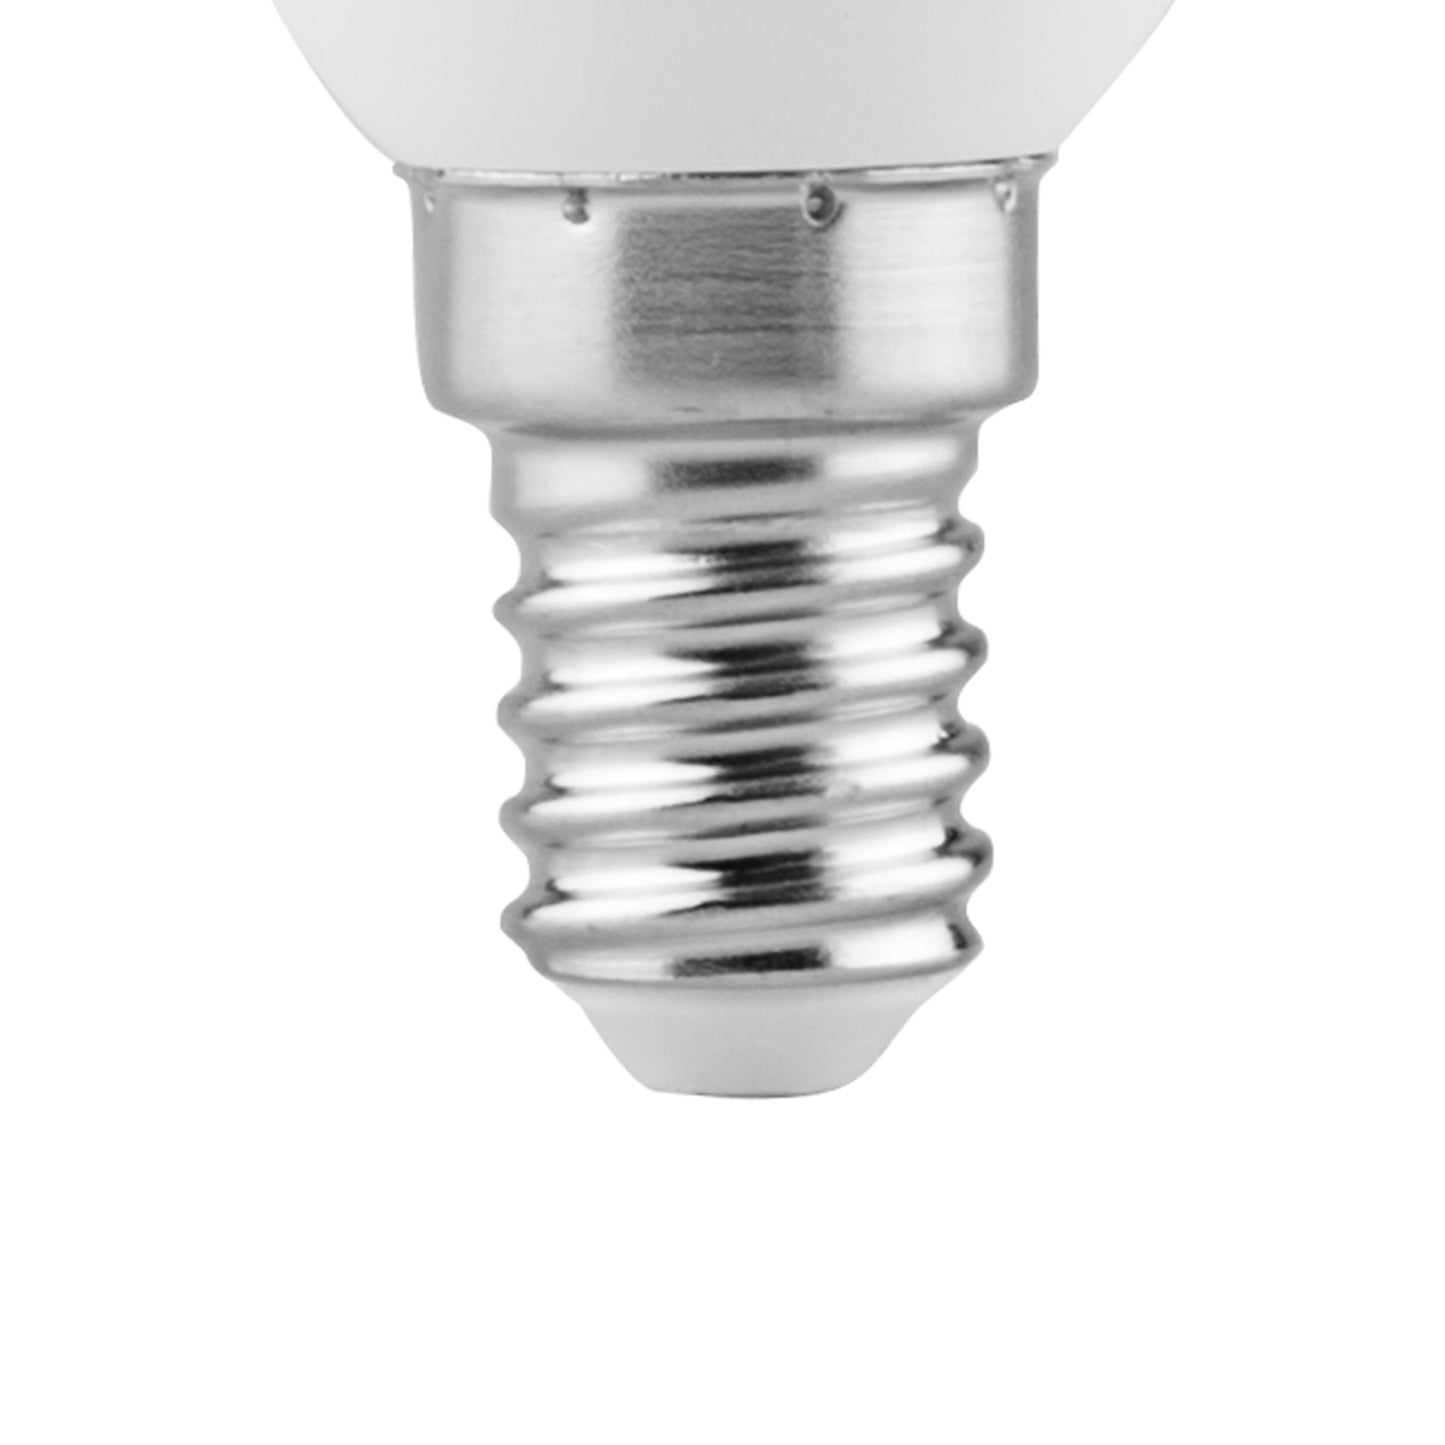 LED LAMP LAMP MATEL PLATE E14 6W 